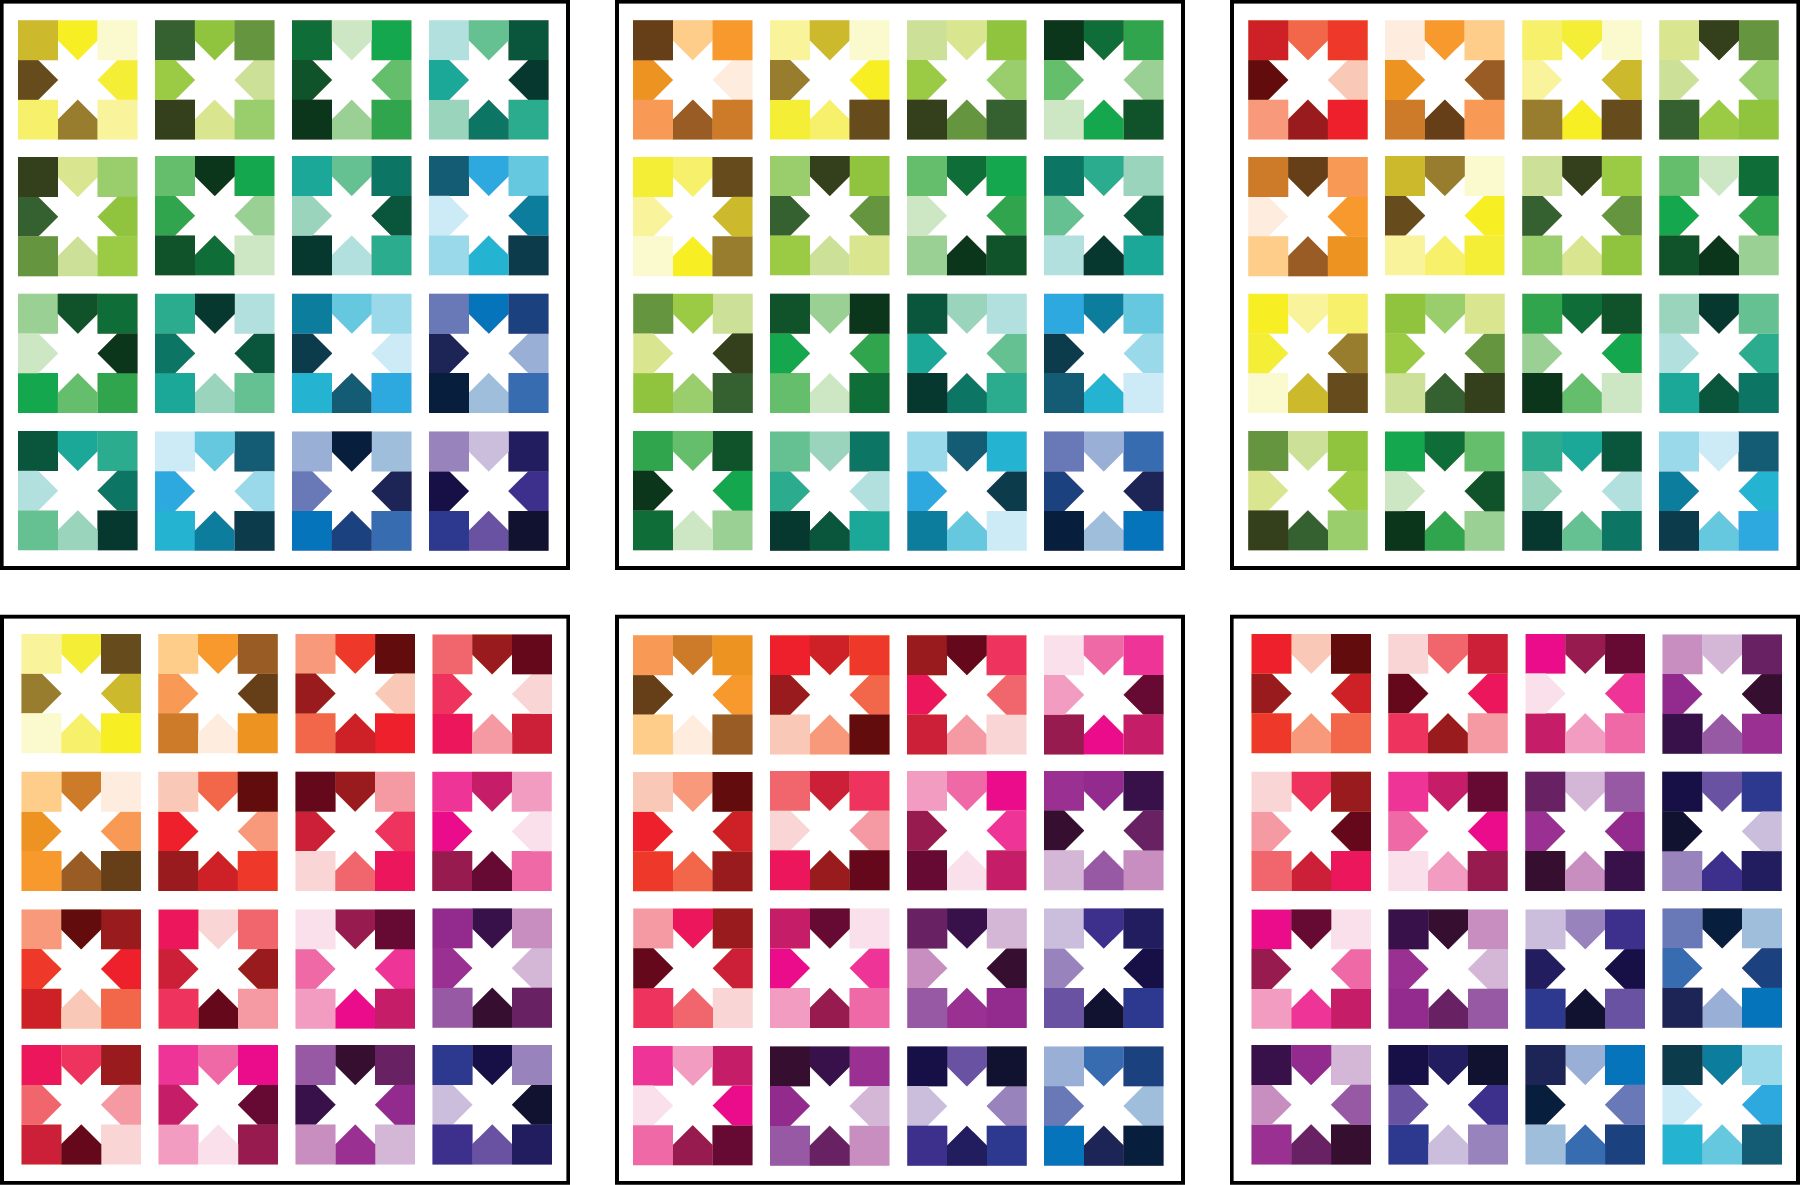 Joyful Stars quilt mockups in rainbow colors - Sewfinity.com